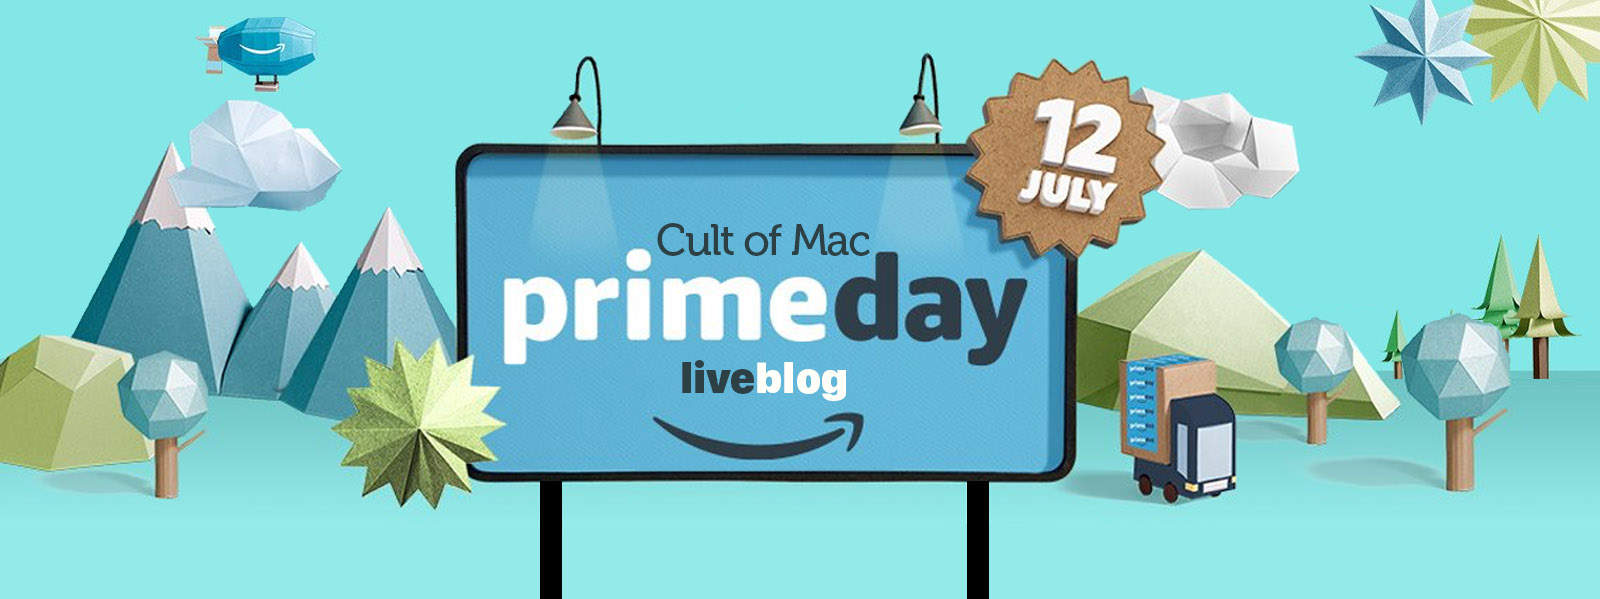 Amazon Prime Day deals